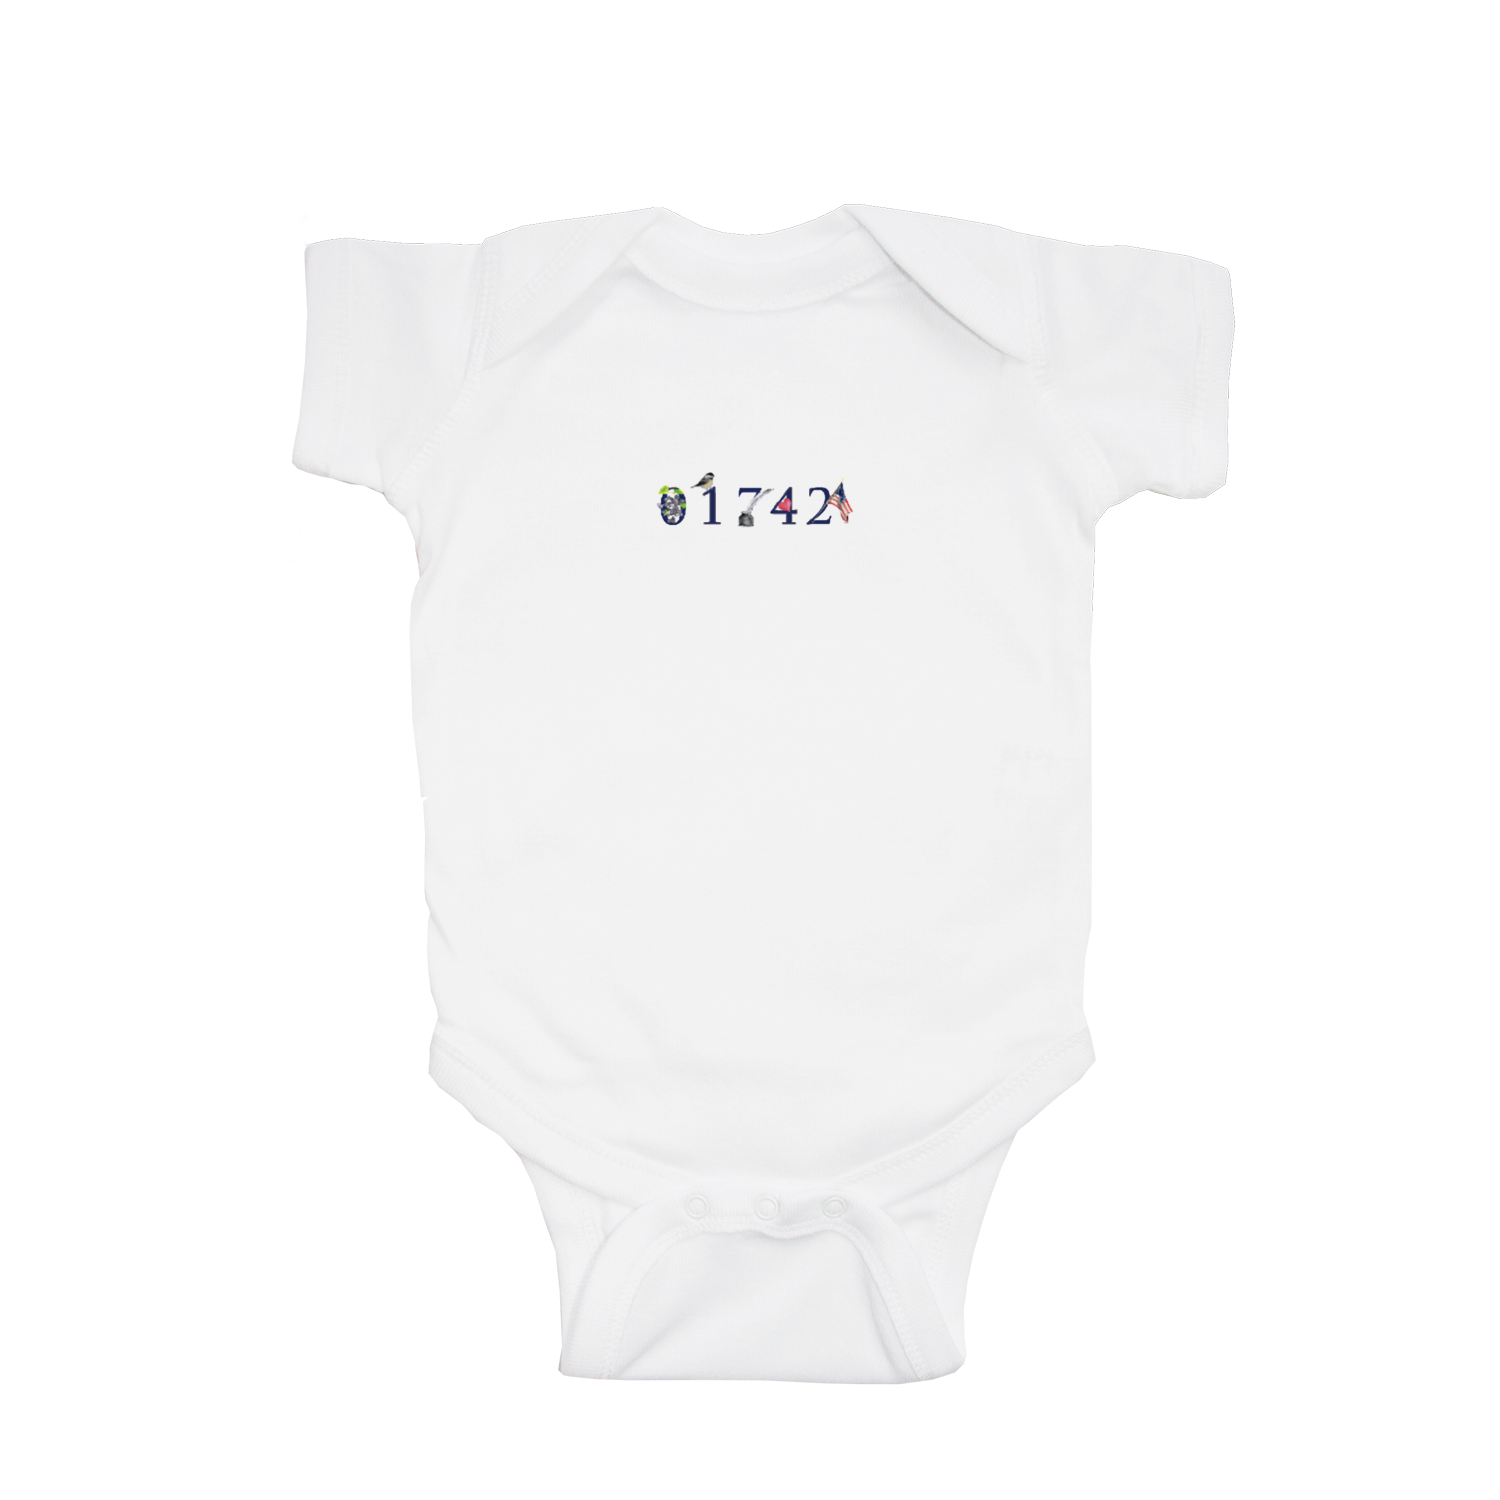 Concord Zip Code baby snap up short sleeve